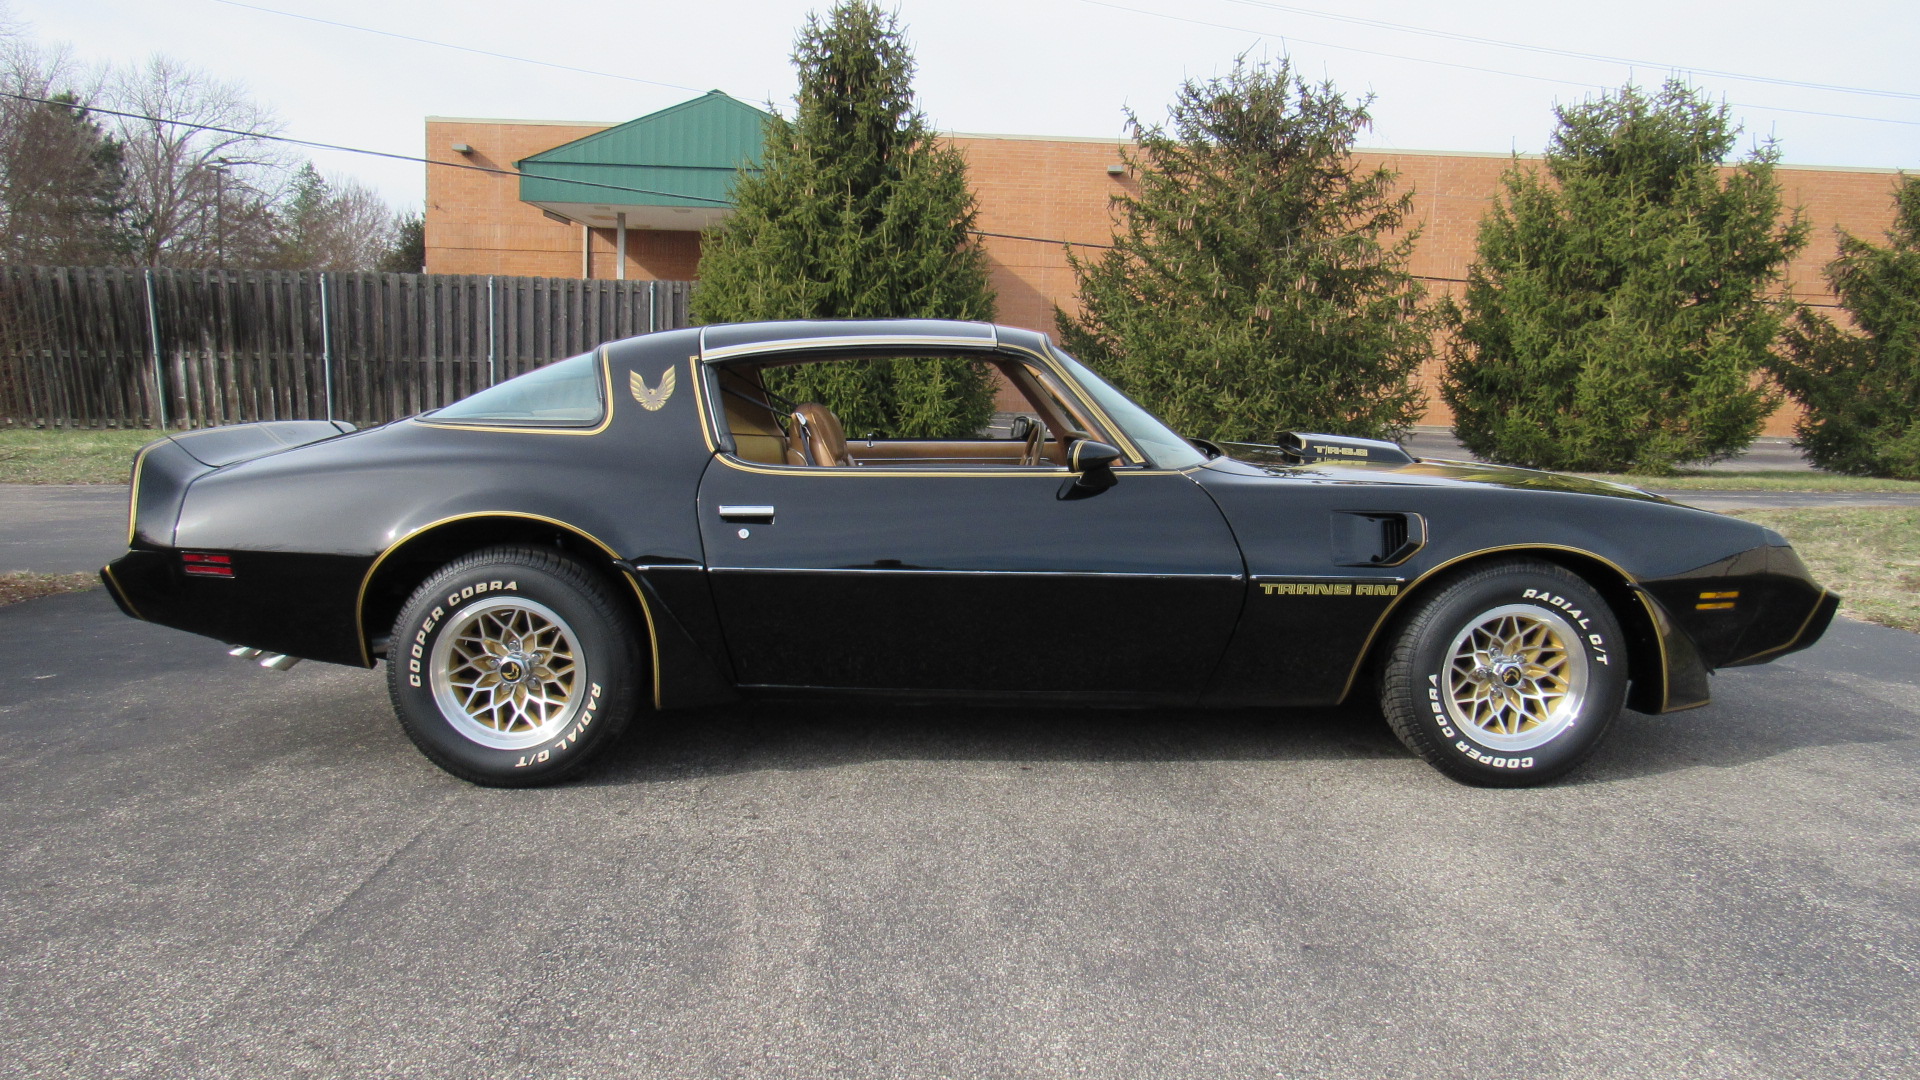 1979 Pontiac TA, Y84 S.E., 4 Speed, Restored, SOLD!